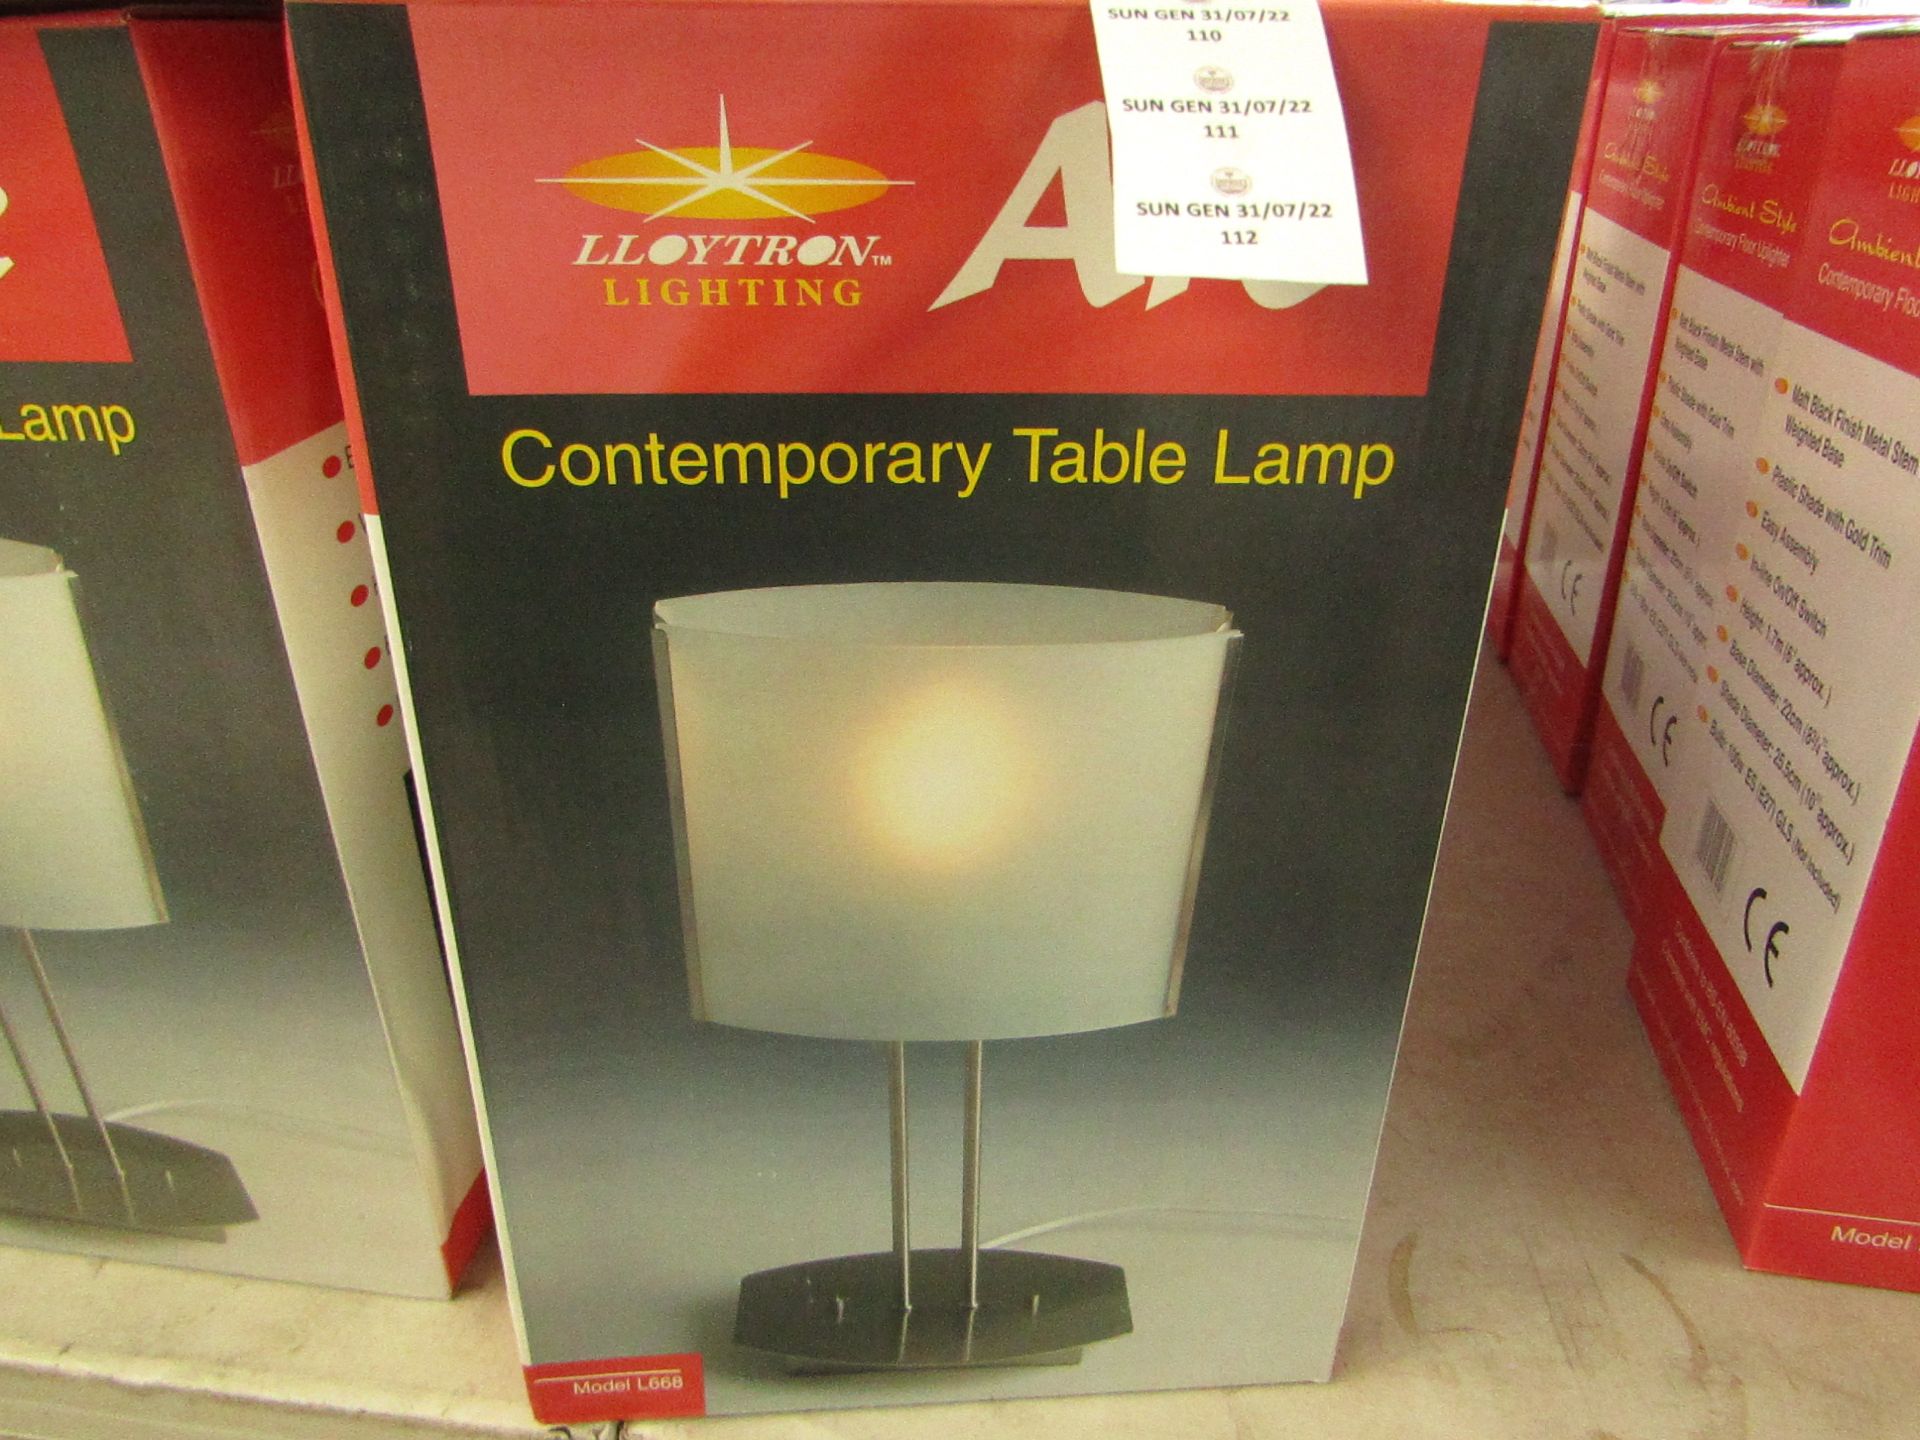 Lloytron Lighting - Arc Contemporary Table Lamp - Looks Unused & Boxed.